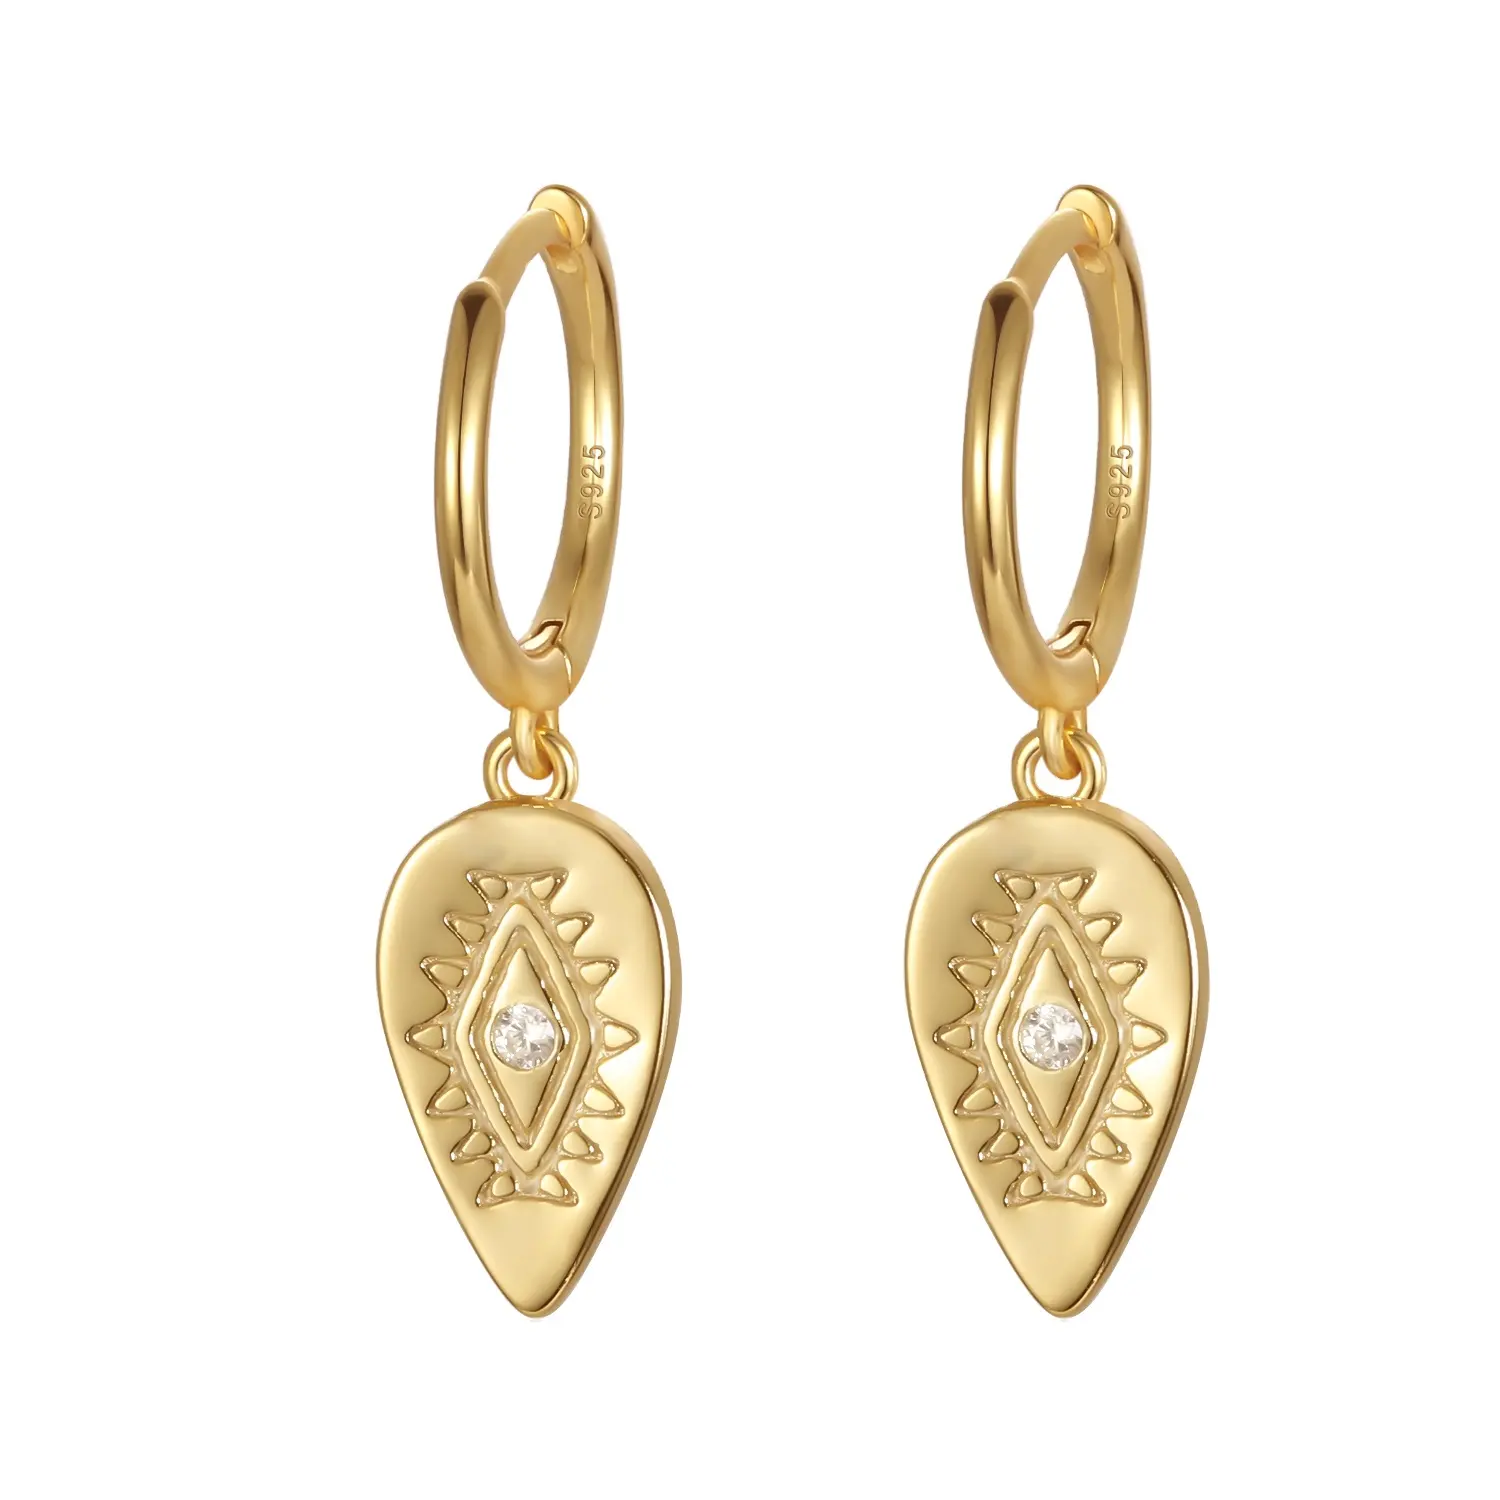 2022 INS 925 Sterling Silver Fashion totem oval drop shape cz diamond dangle 18k gold plated huggies hoop earrings jewelry